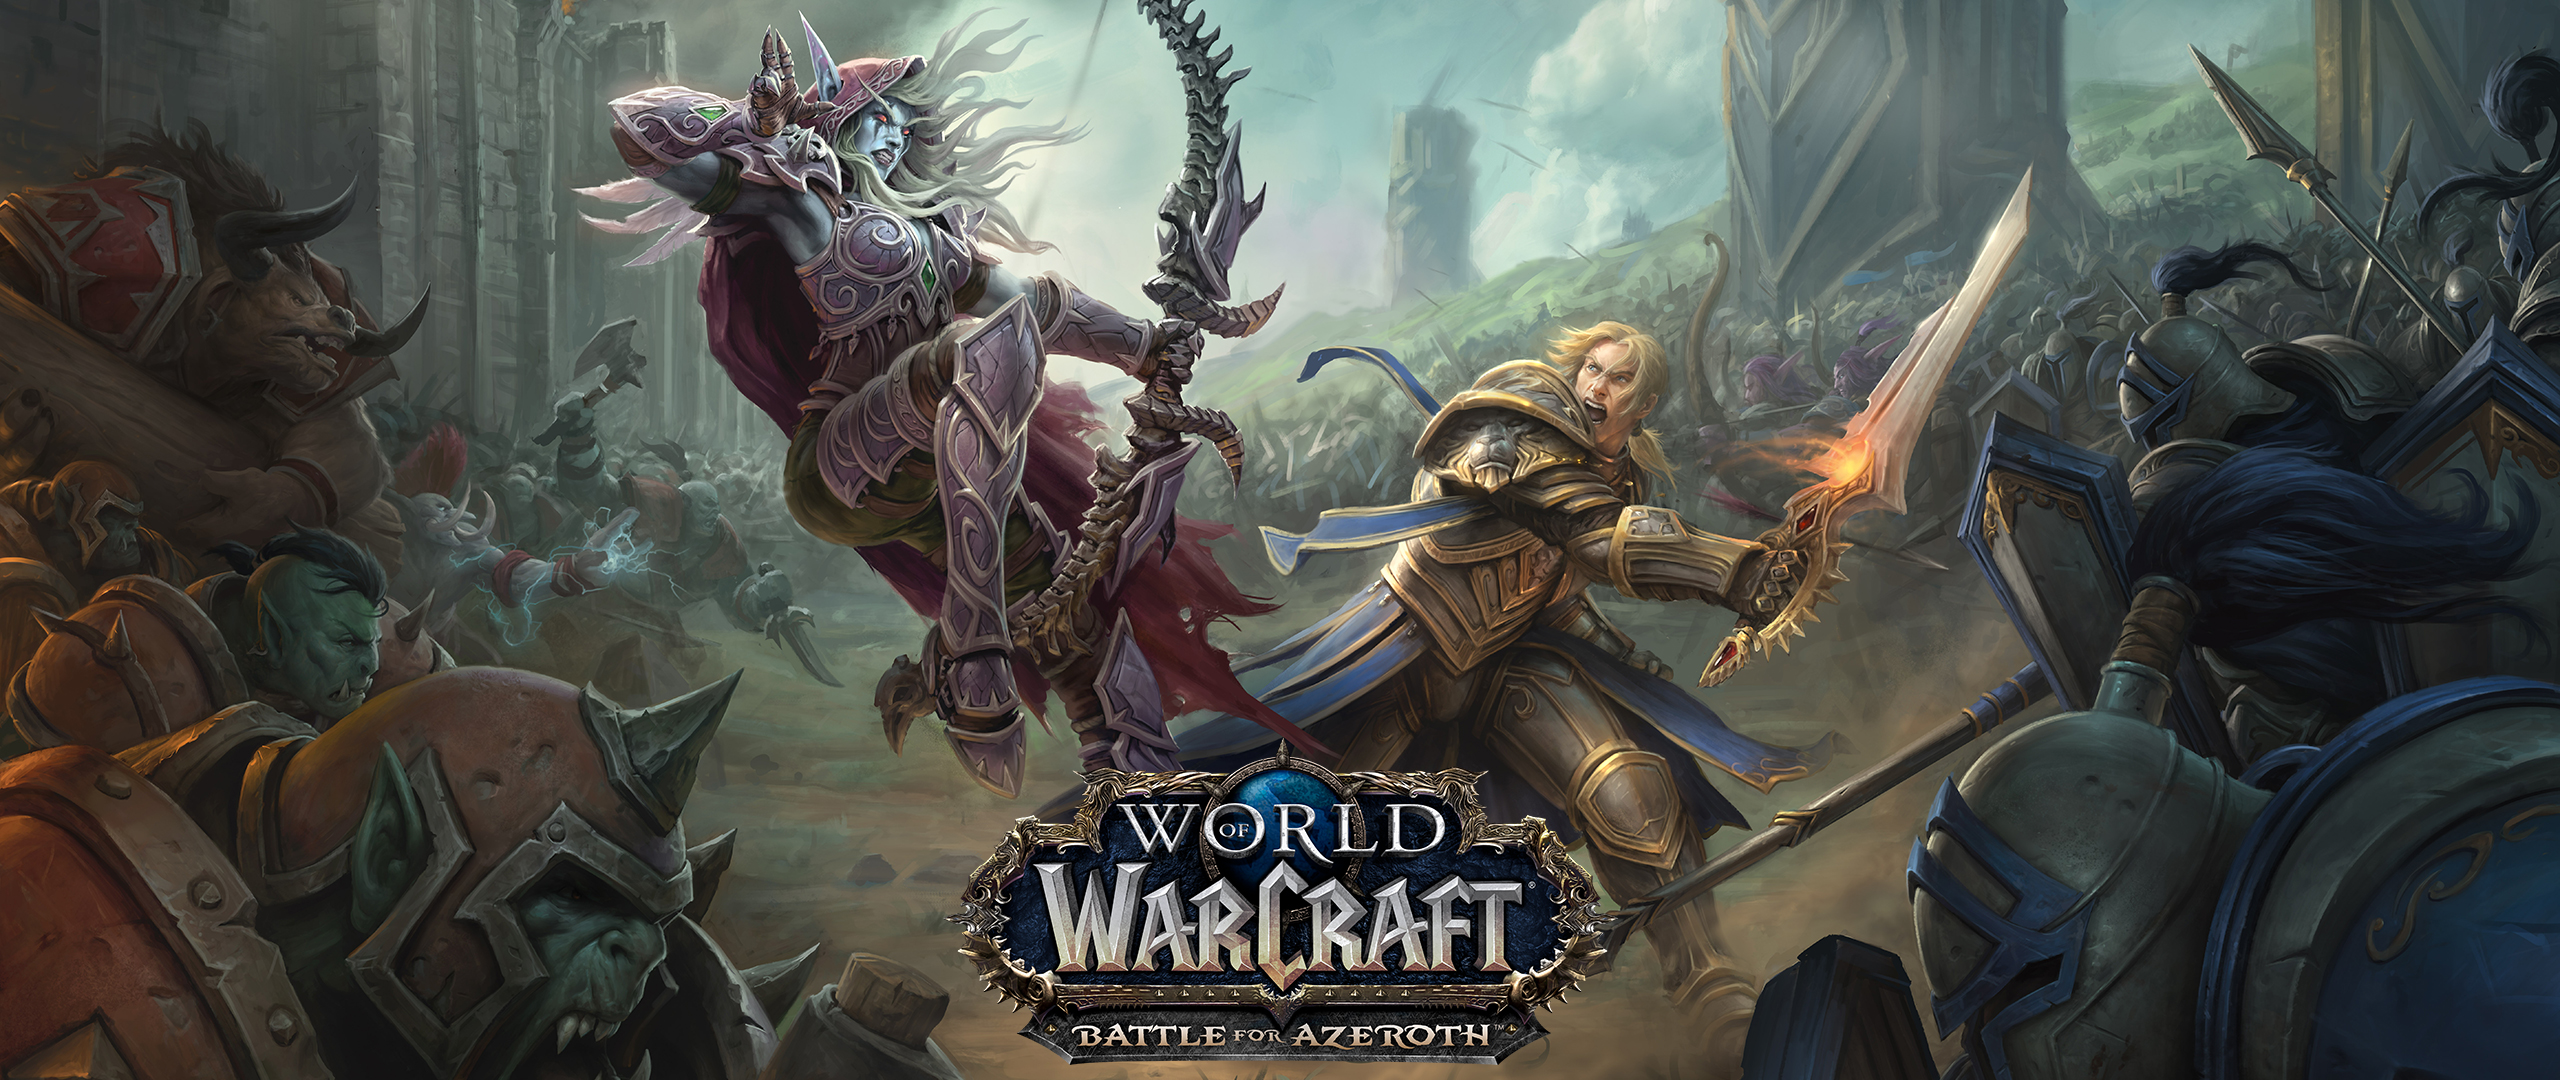 General 2560x1080 World of Warcraft Sylvanas Windrunner World of Warcraft: Battle for Azeroth video game art